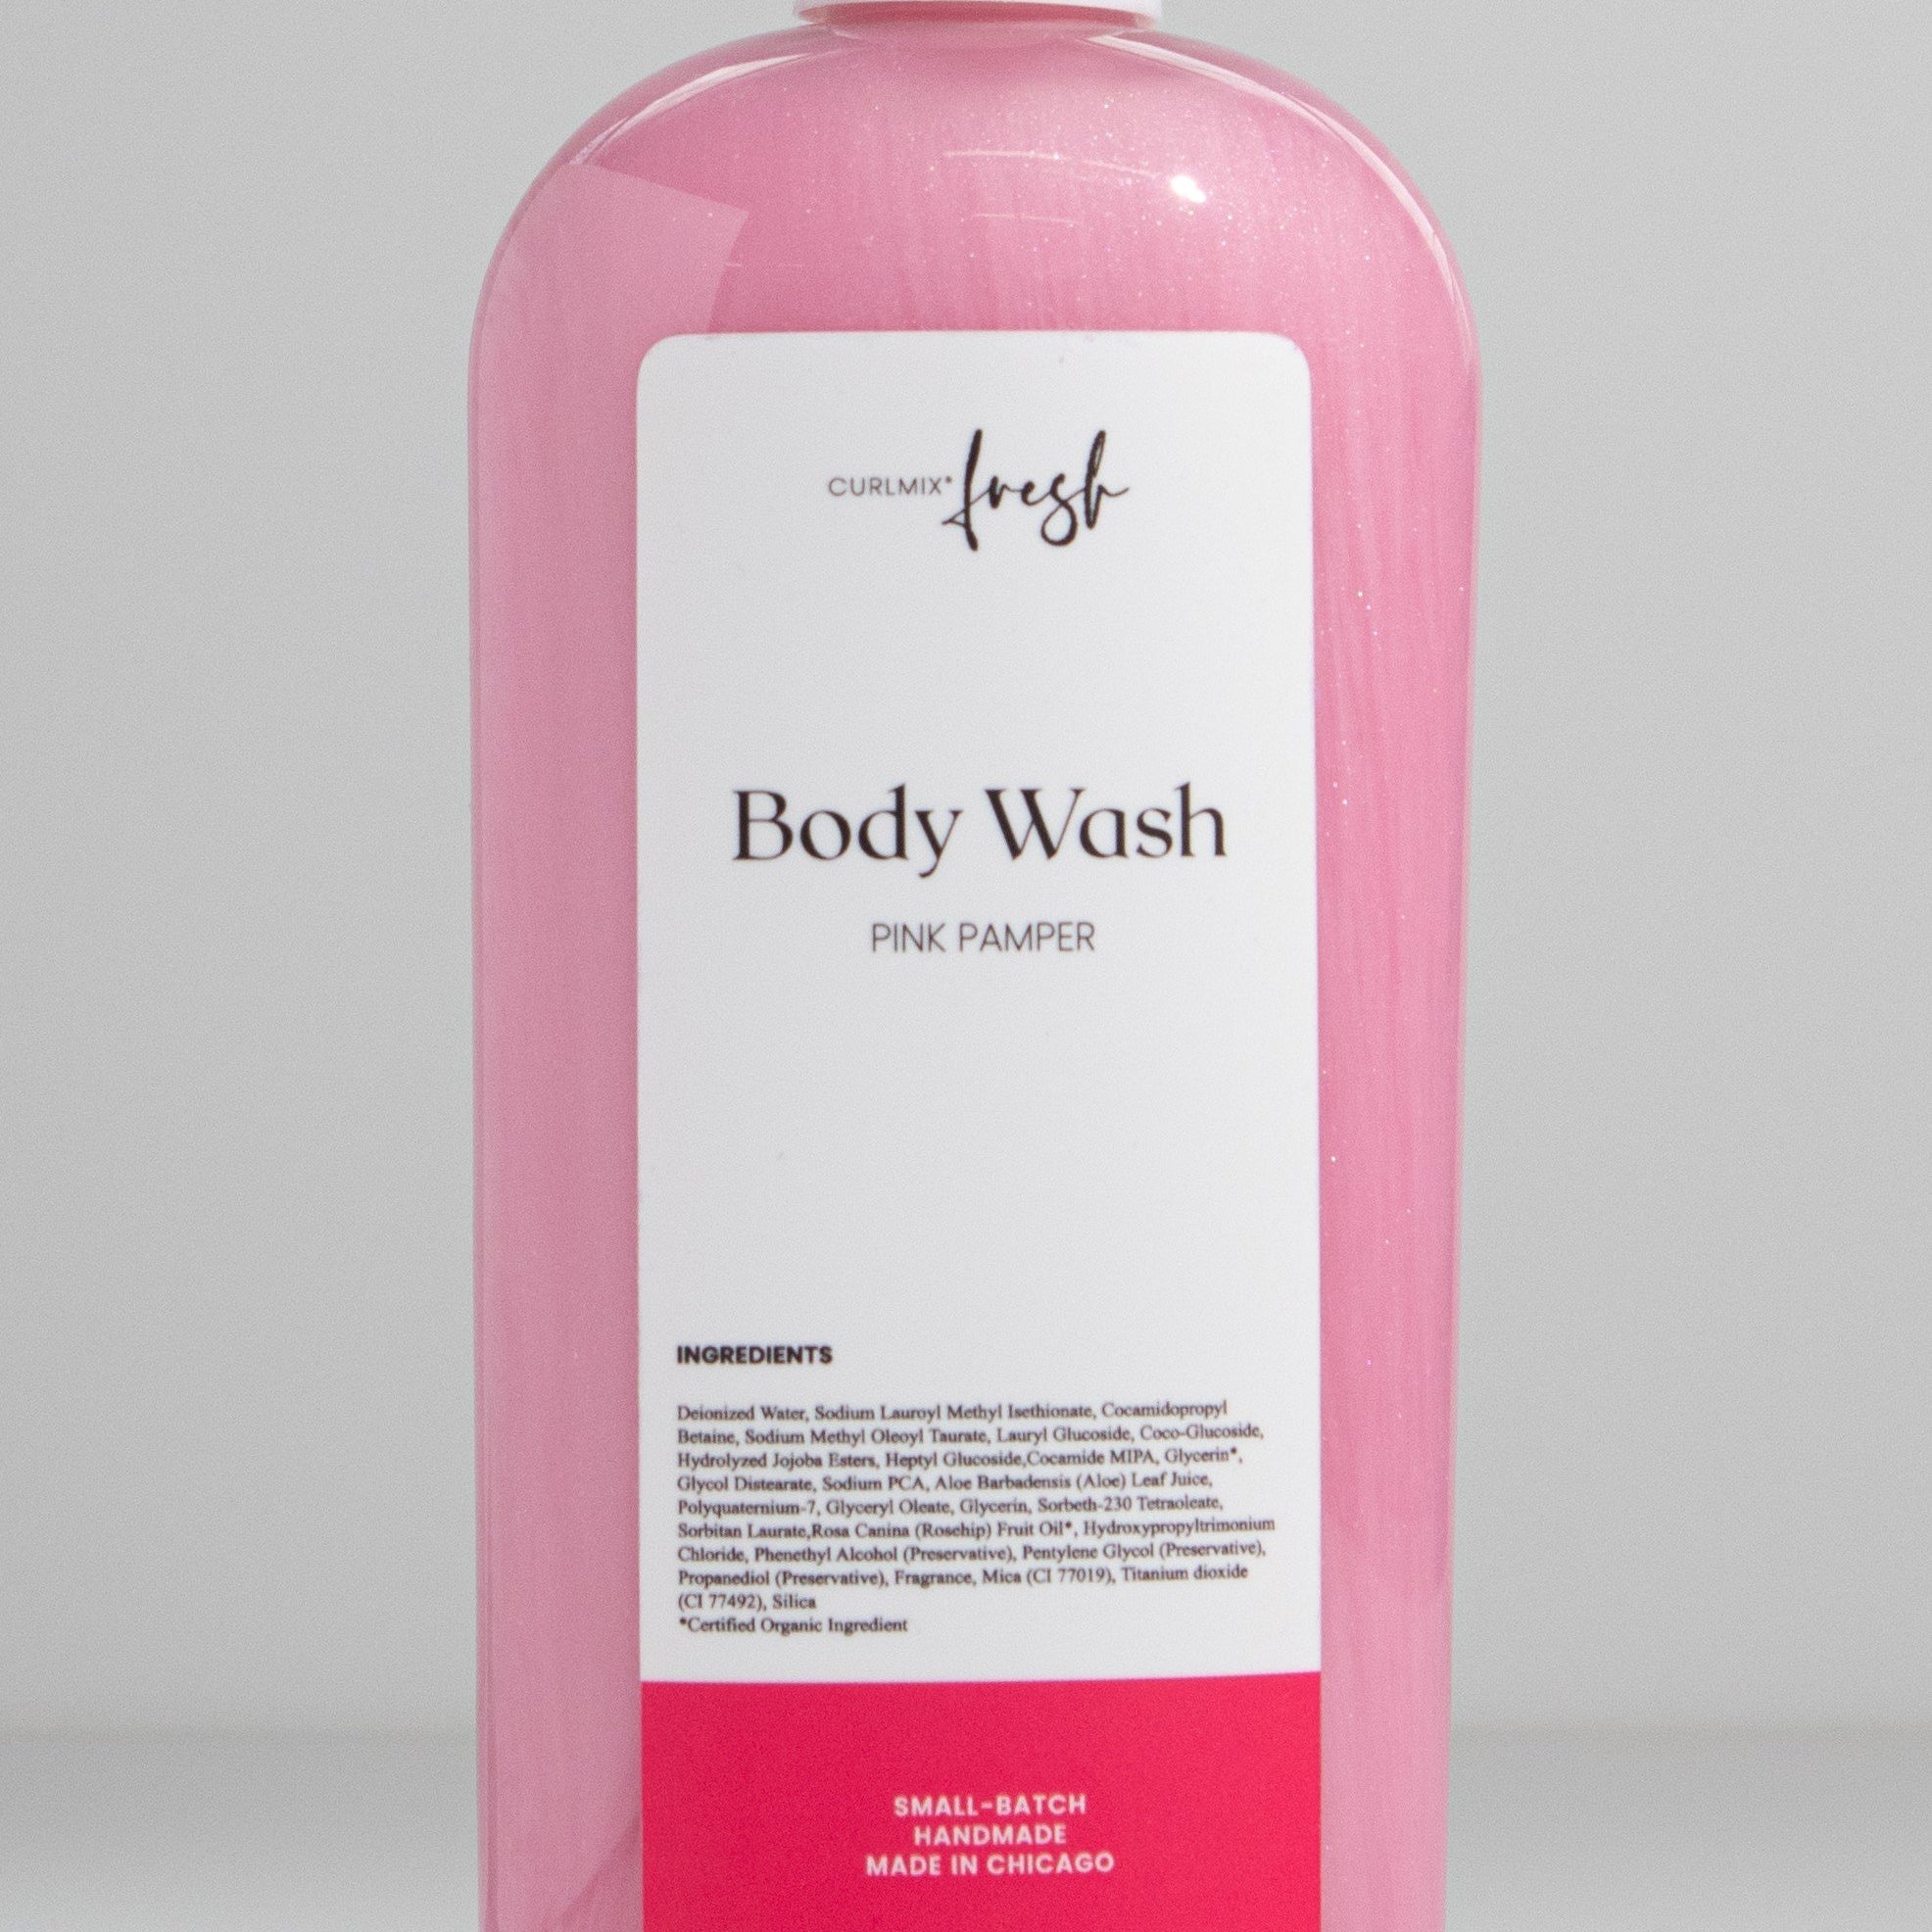 Pink Pamper Body Wash CurlMix Fresh